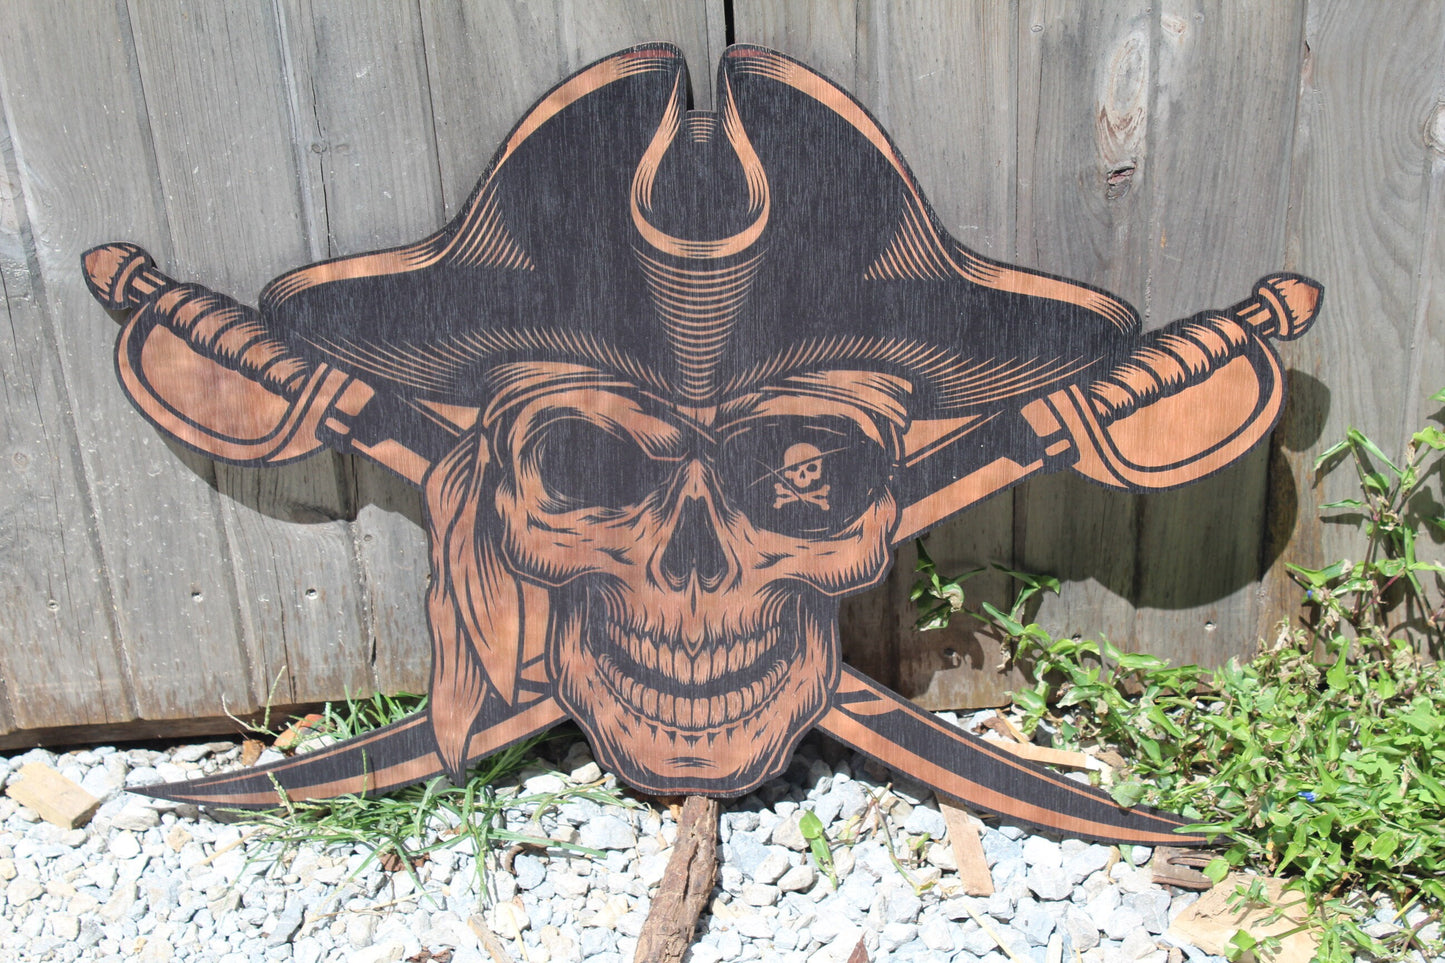 Huge Pirate Skeleton Cut Out UV Printed Halloween Party Theme Wood Wall Decoration Skull Sword Cross Bones Ship Flying Dutchman Nautical